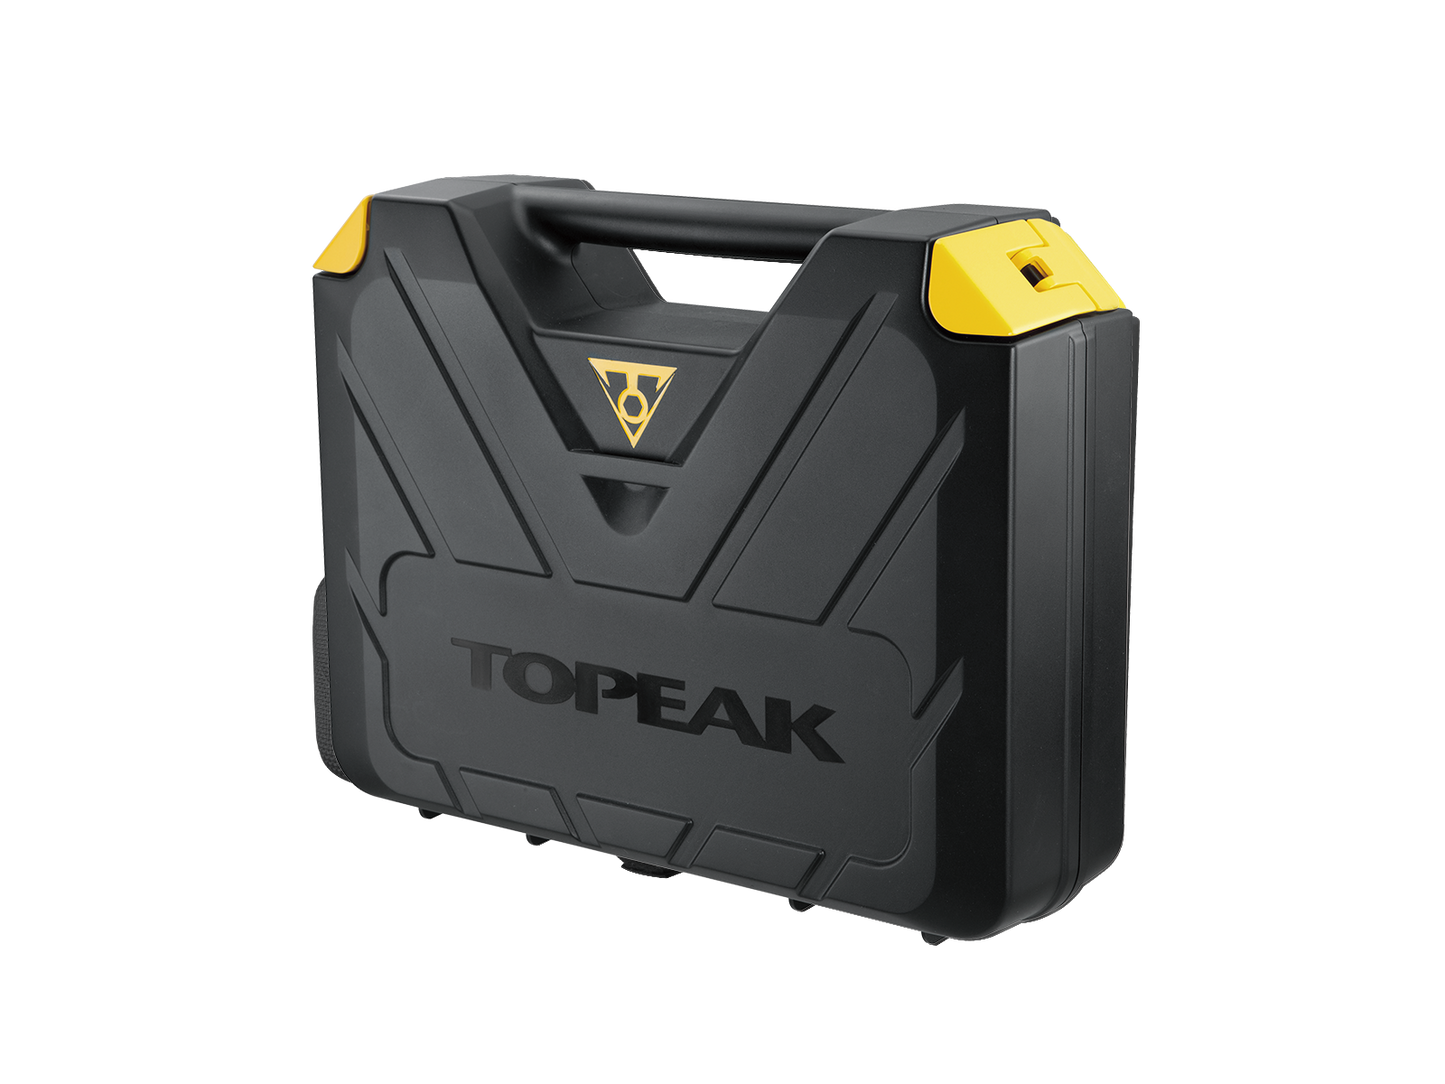 Topeak Prepbox手提式工具套裝盒, 36 種工具-TPX-02 / Topeak Prepbox,One Set,Contain 36 Tools-TPX-02